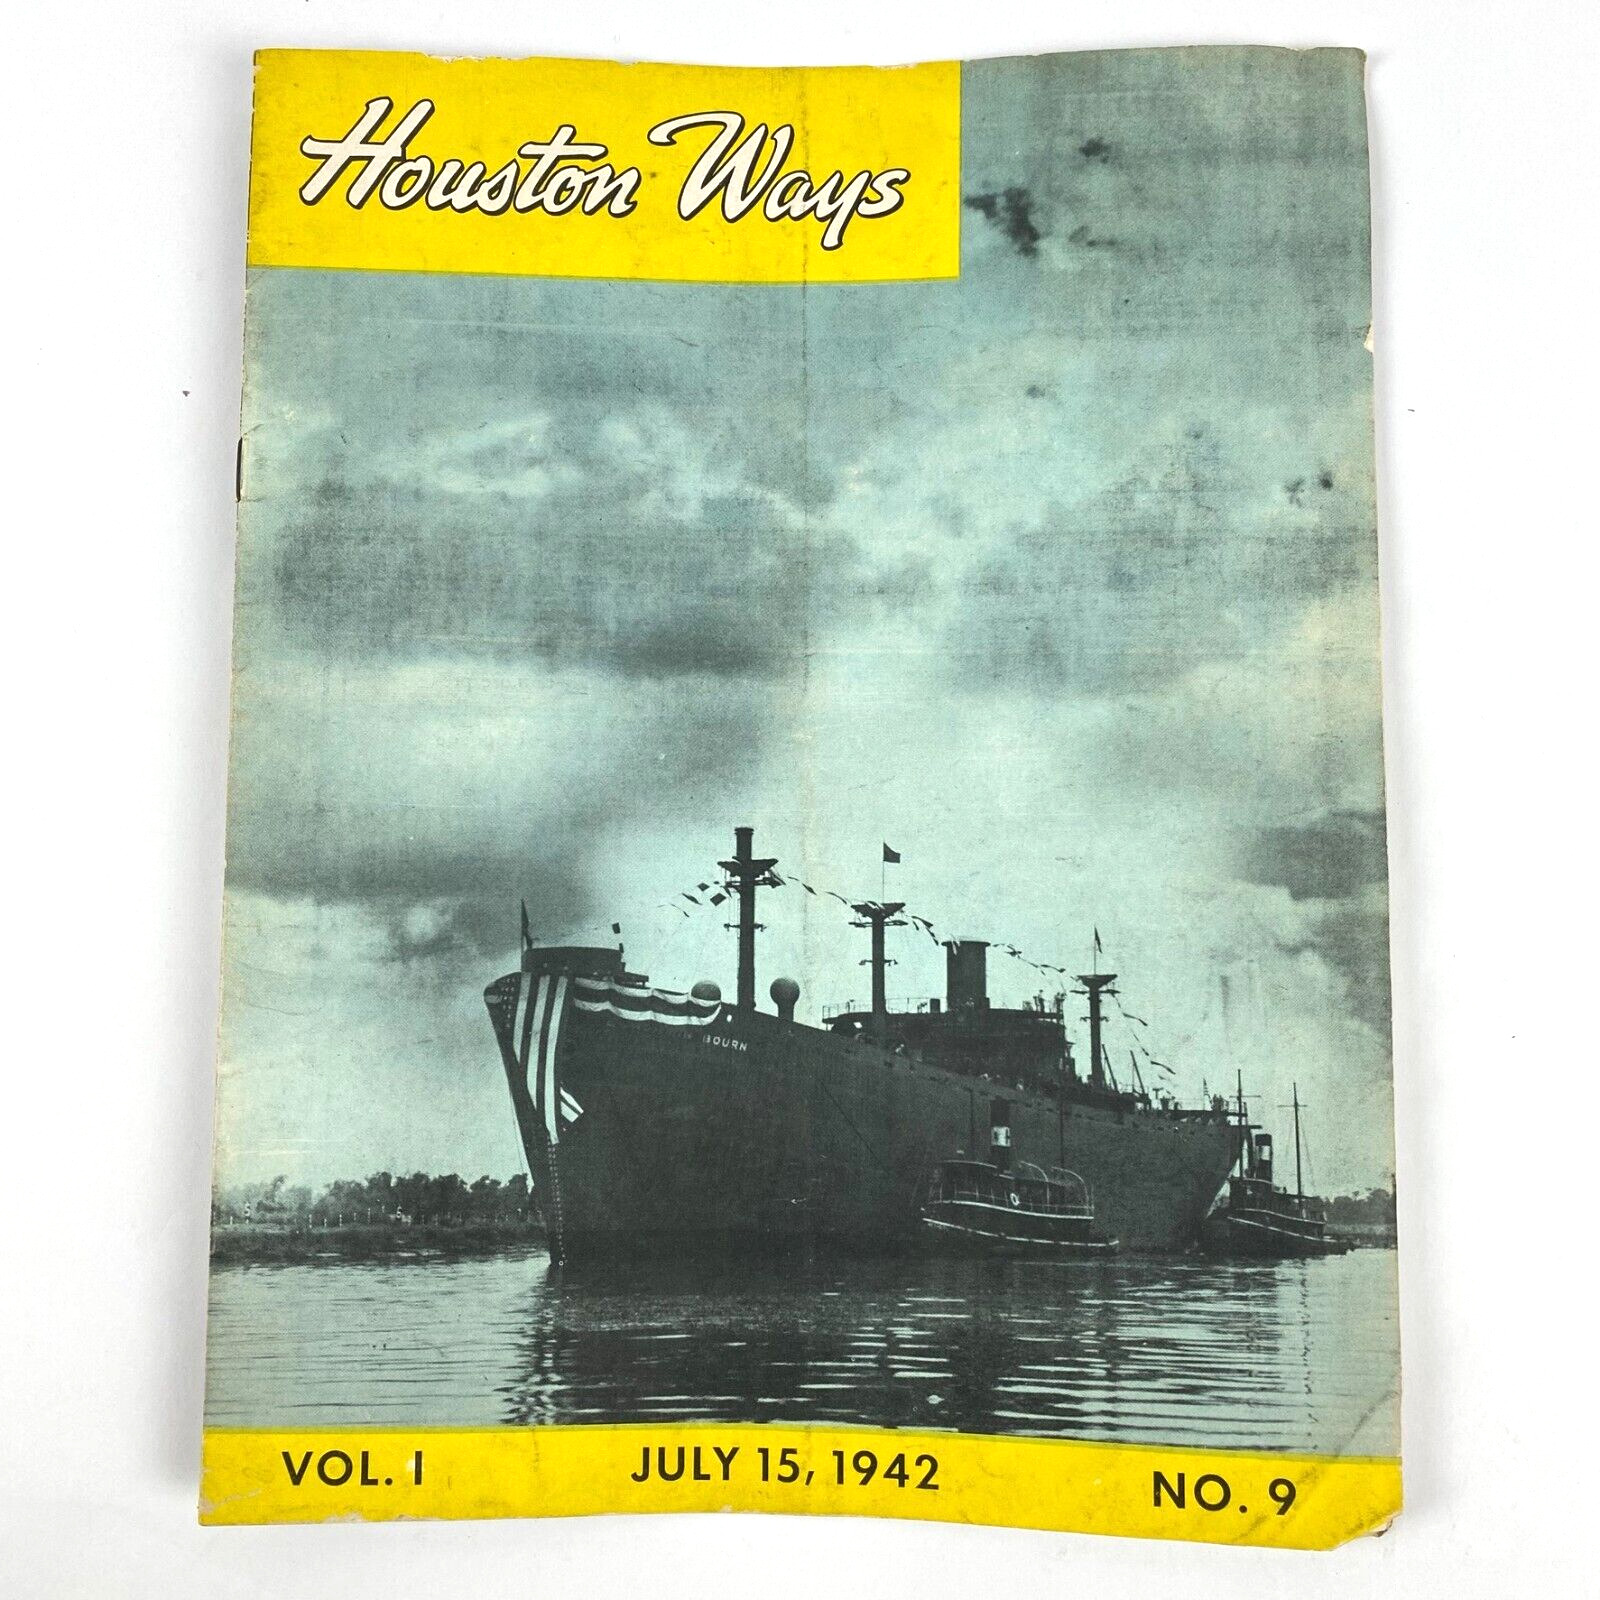 July 1942 WWII Era Houston Ways Shipbulding Merchant Employee Magazine TX VTG